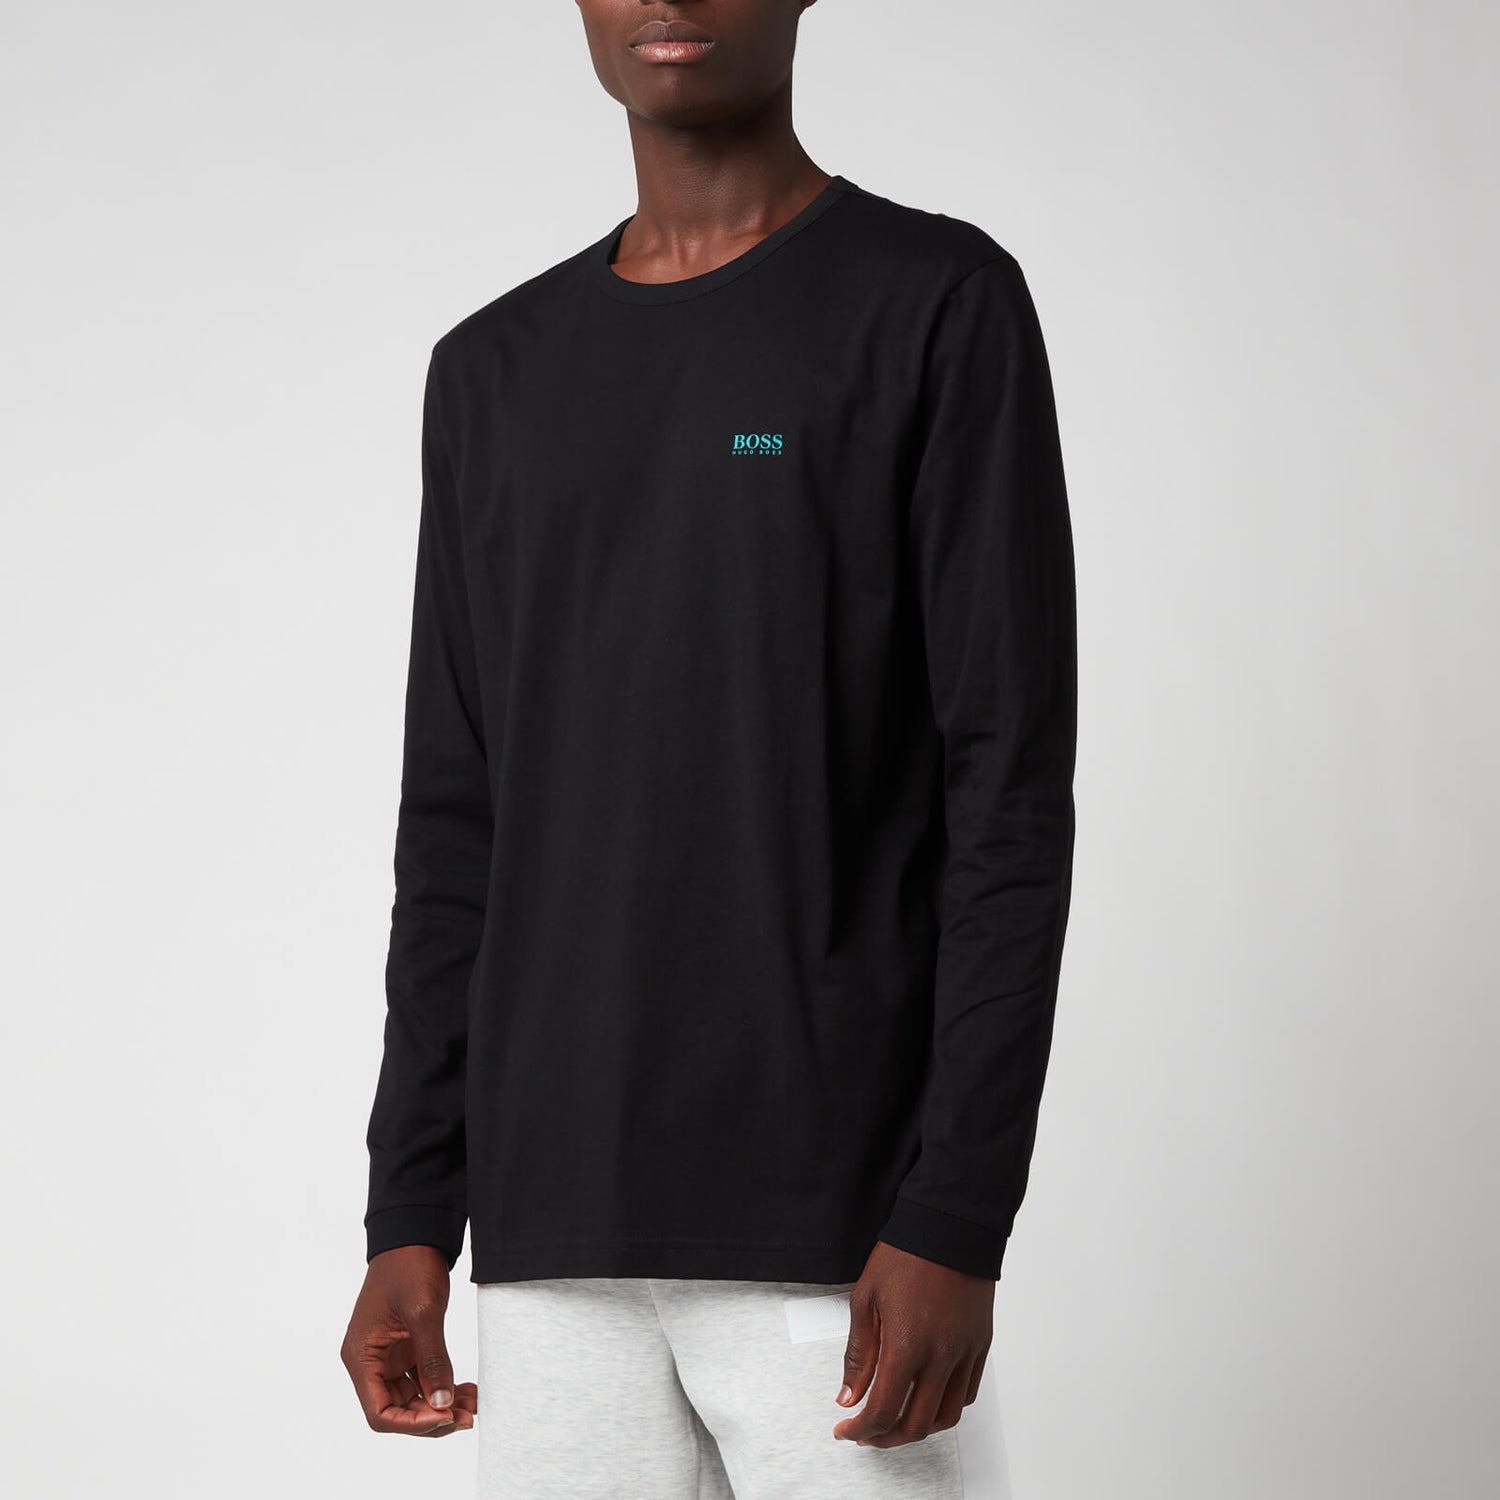 BOSS Athleisure Men's Shoulder Logo Long Sleeve T-Shirt - Charcoal